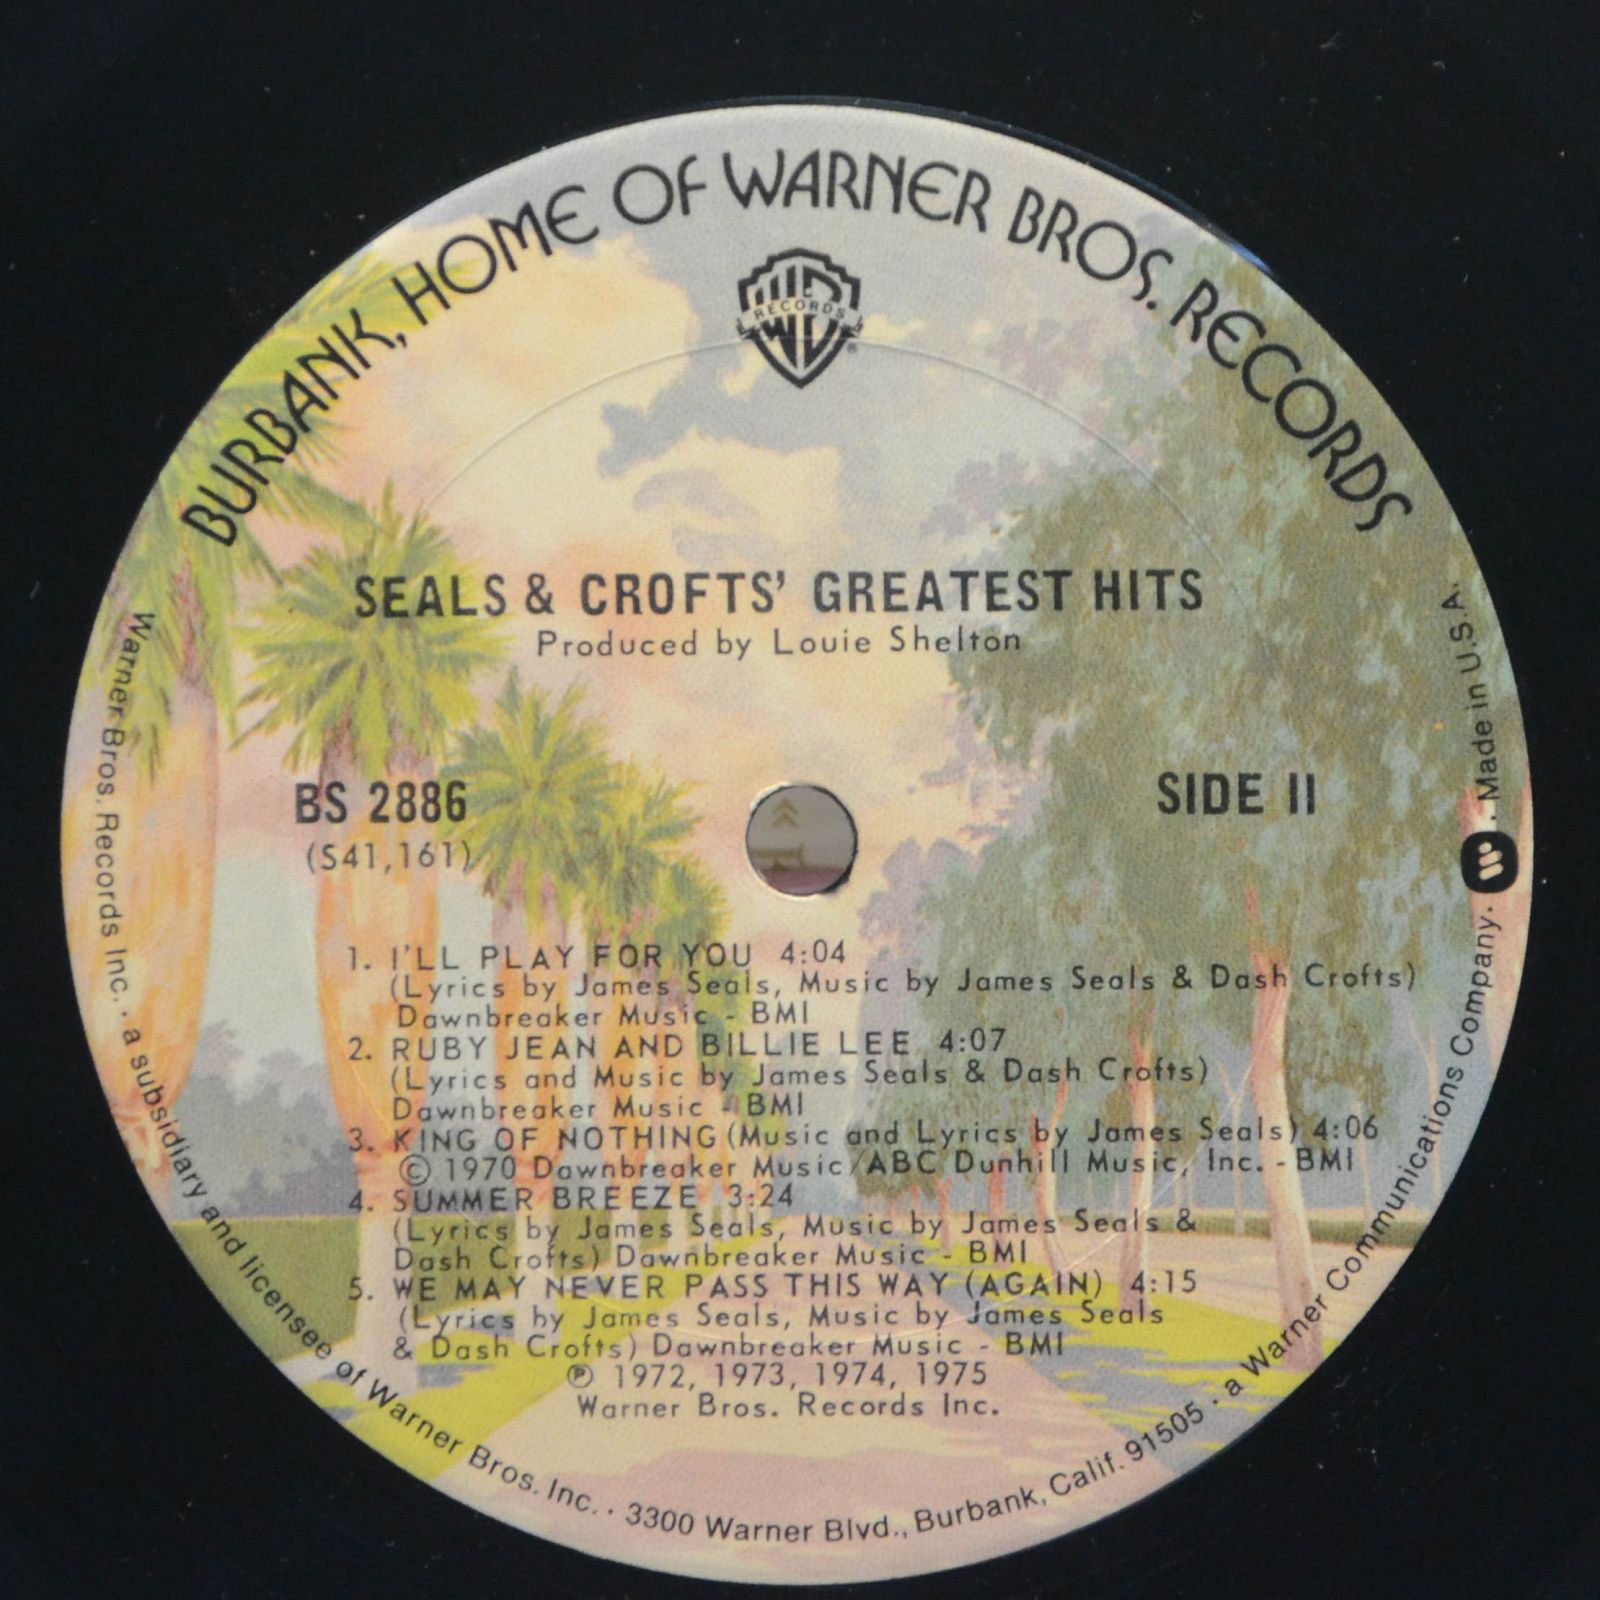 Seals & Crofts — Greatest Hits, 1975